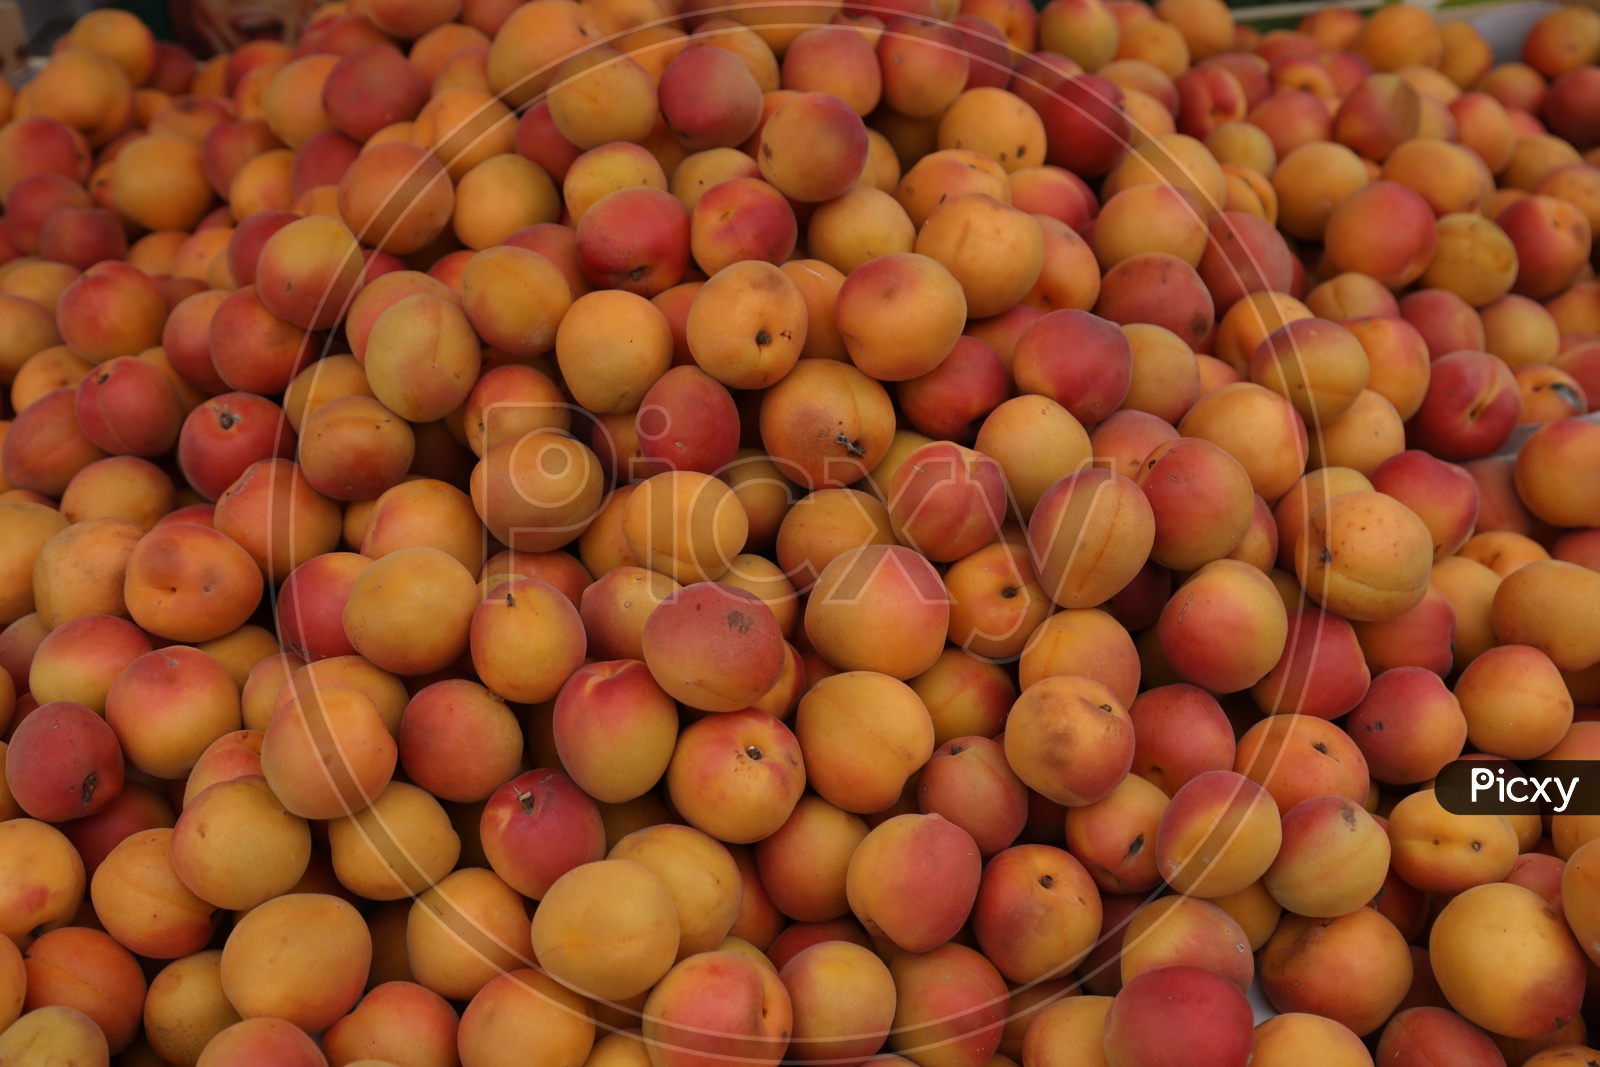 Apricots Closeup Shot in a Supermarket